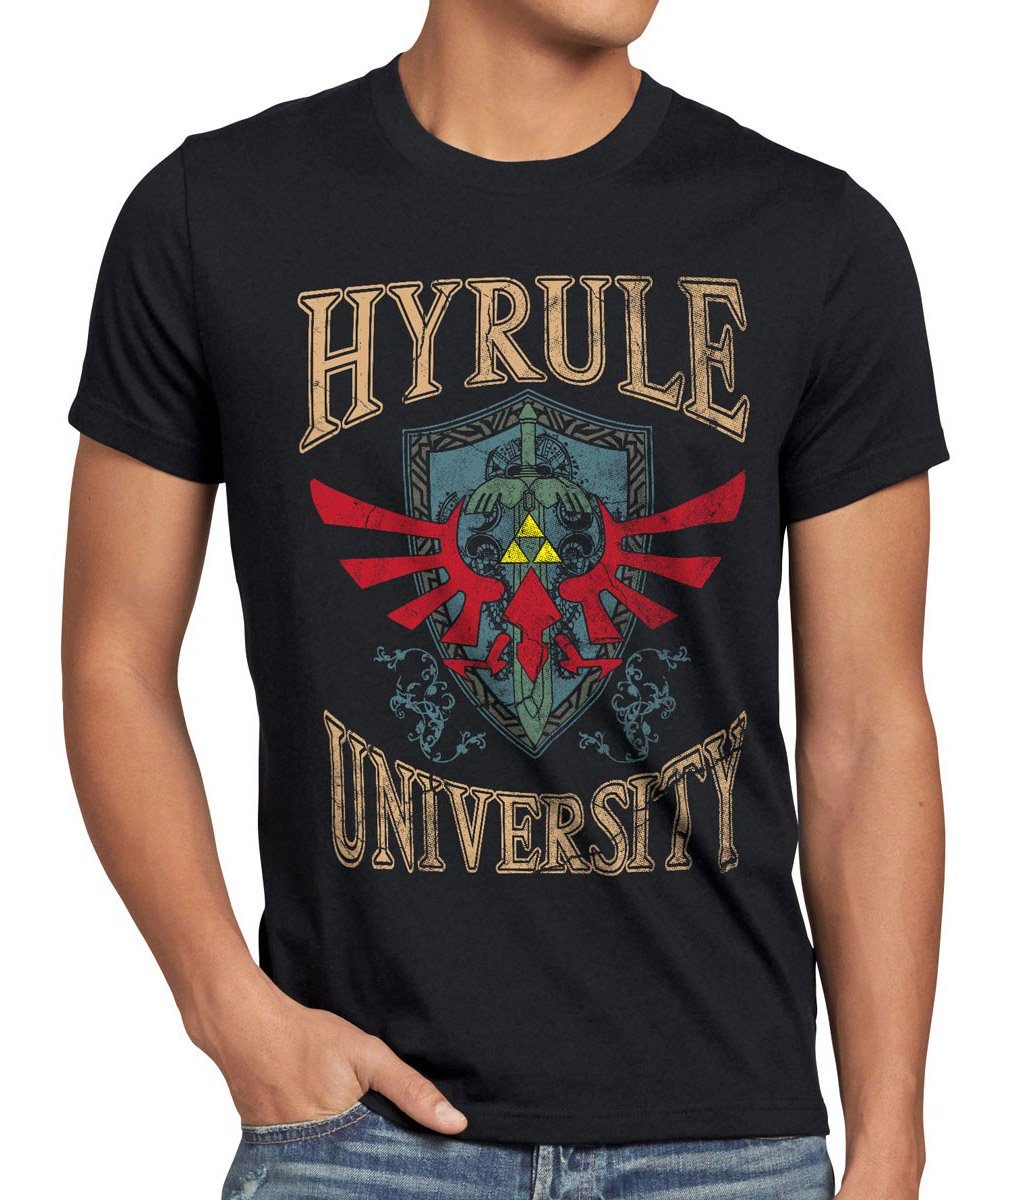 style3 Print-Shirt schwarz wii Herren link past waker University time Hyrule switch zelda T-Shirt ocarina